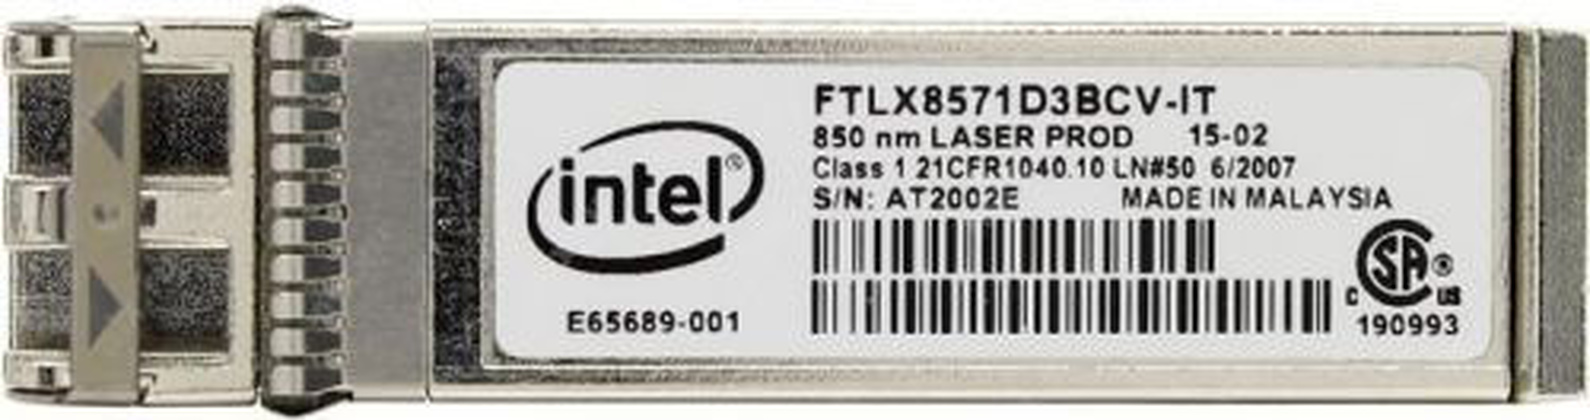 Модуль "Intel" E10GSFPSR 1000BASE-SX/10GBASE-SR